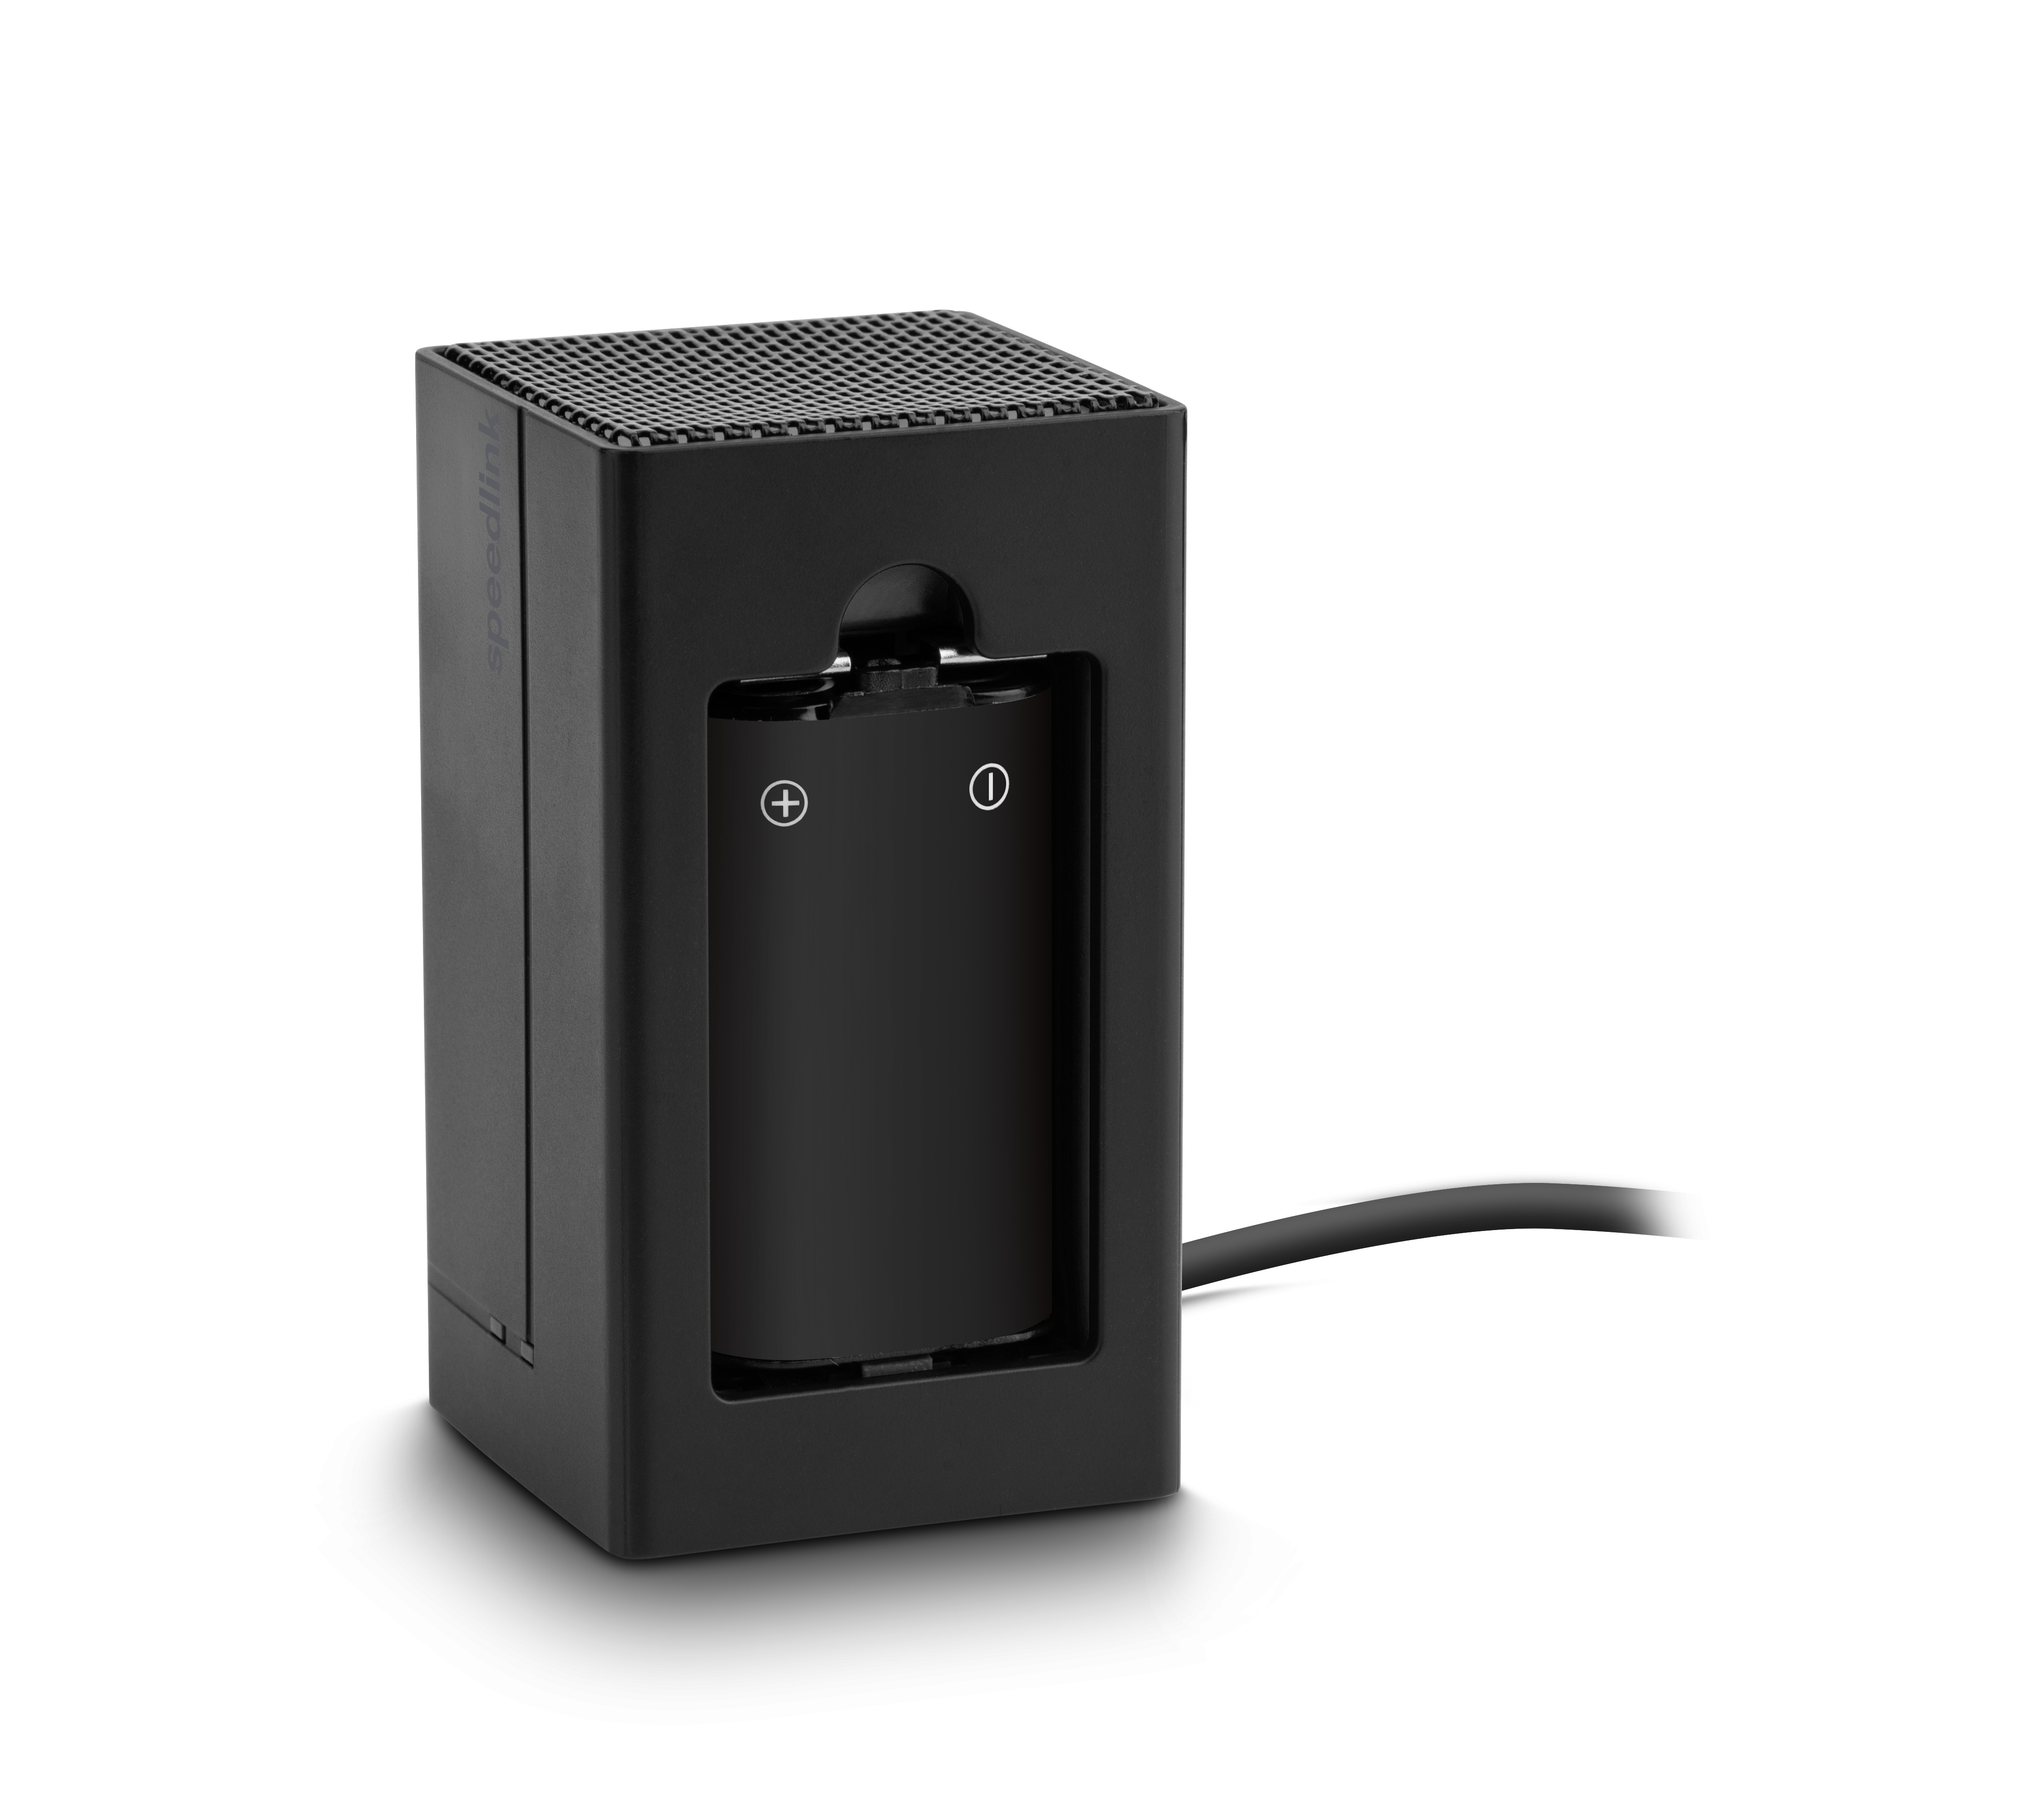 JUIZZ für X-S, XBOX, Ladegerät SPEEDLINK USB black, for Schwarz Dual Xbox Charger Series